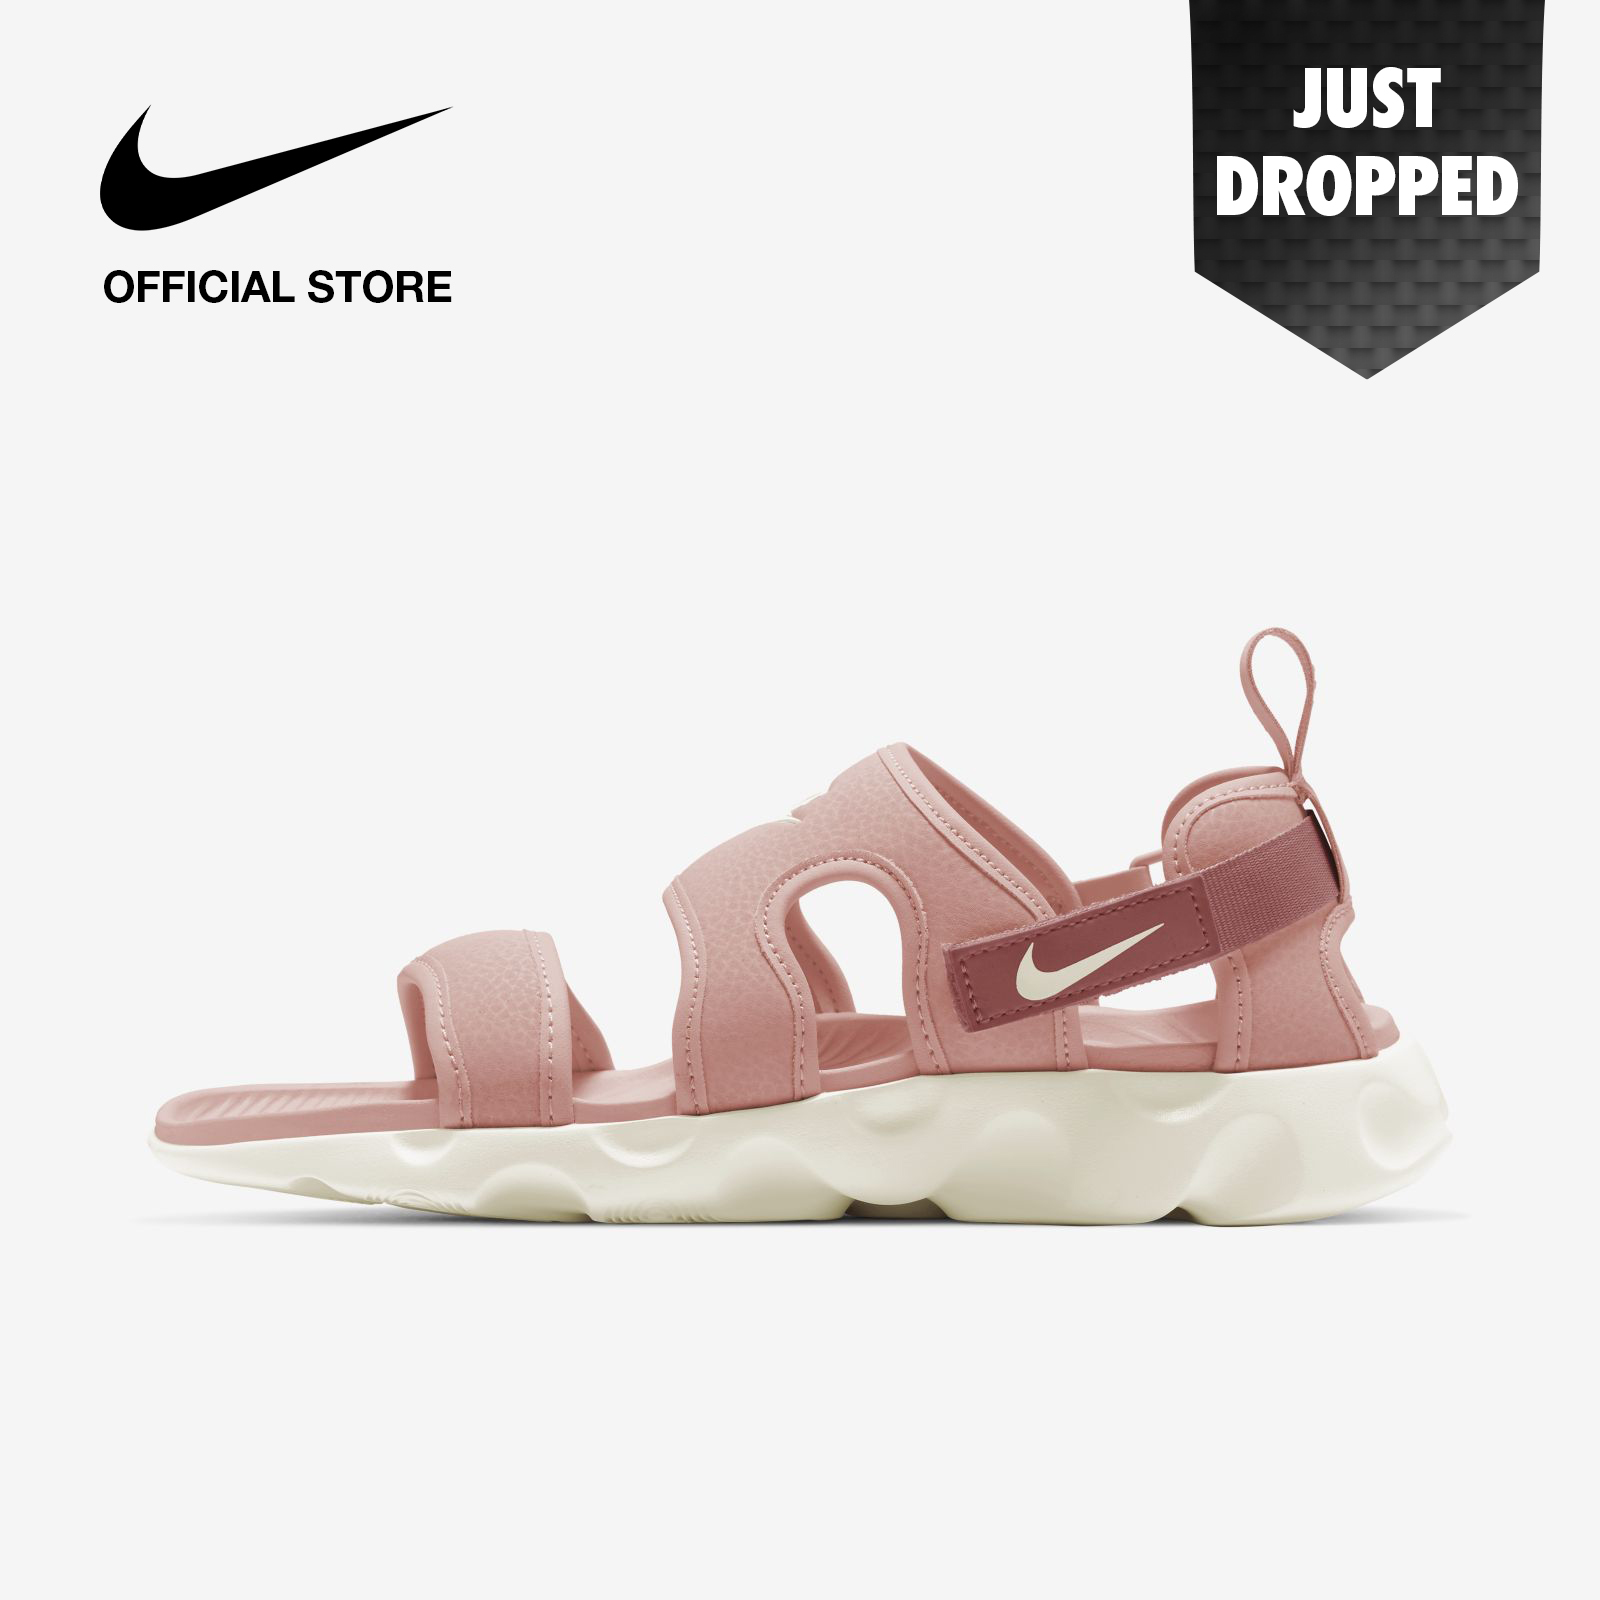 Nike Women's Owaysis Sandals - Rust Pink ไนกี้ รองเท้าแตะผู้หญิง โอเวย์ซิส - สีชมพู